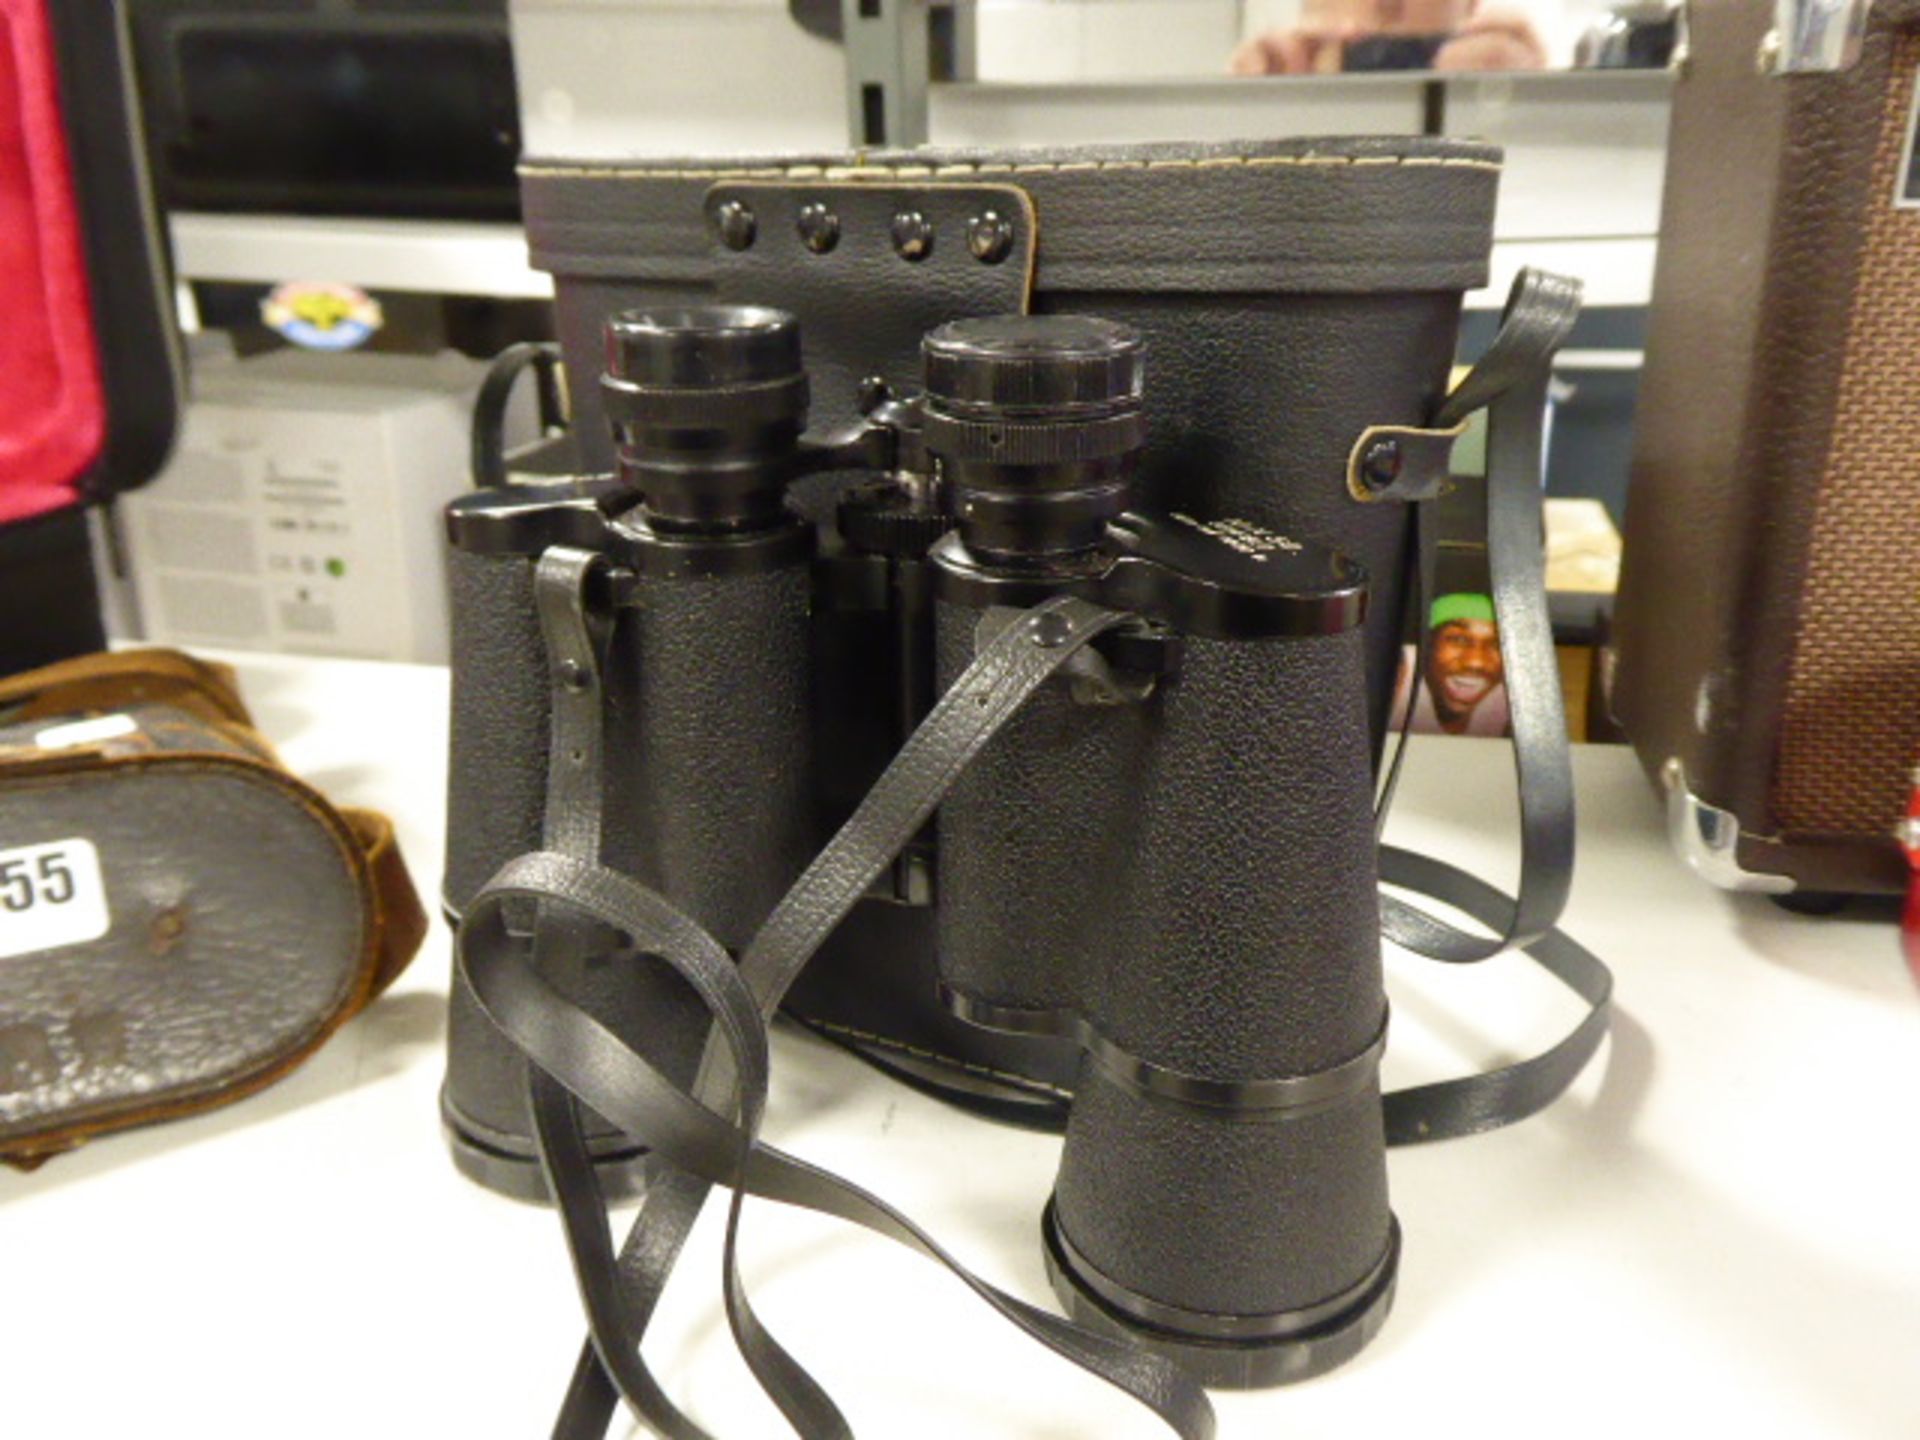 Pair of Jaguar 10 x 50 binoculars with case